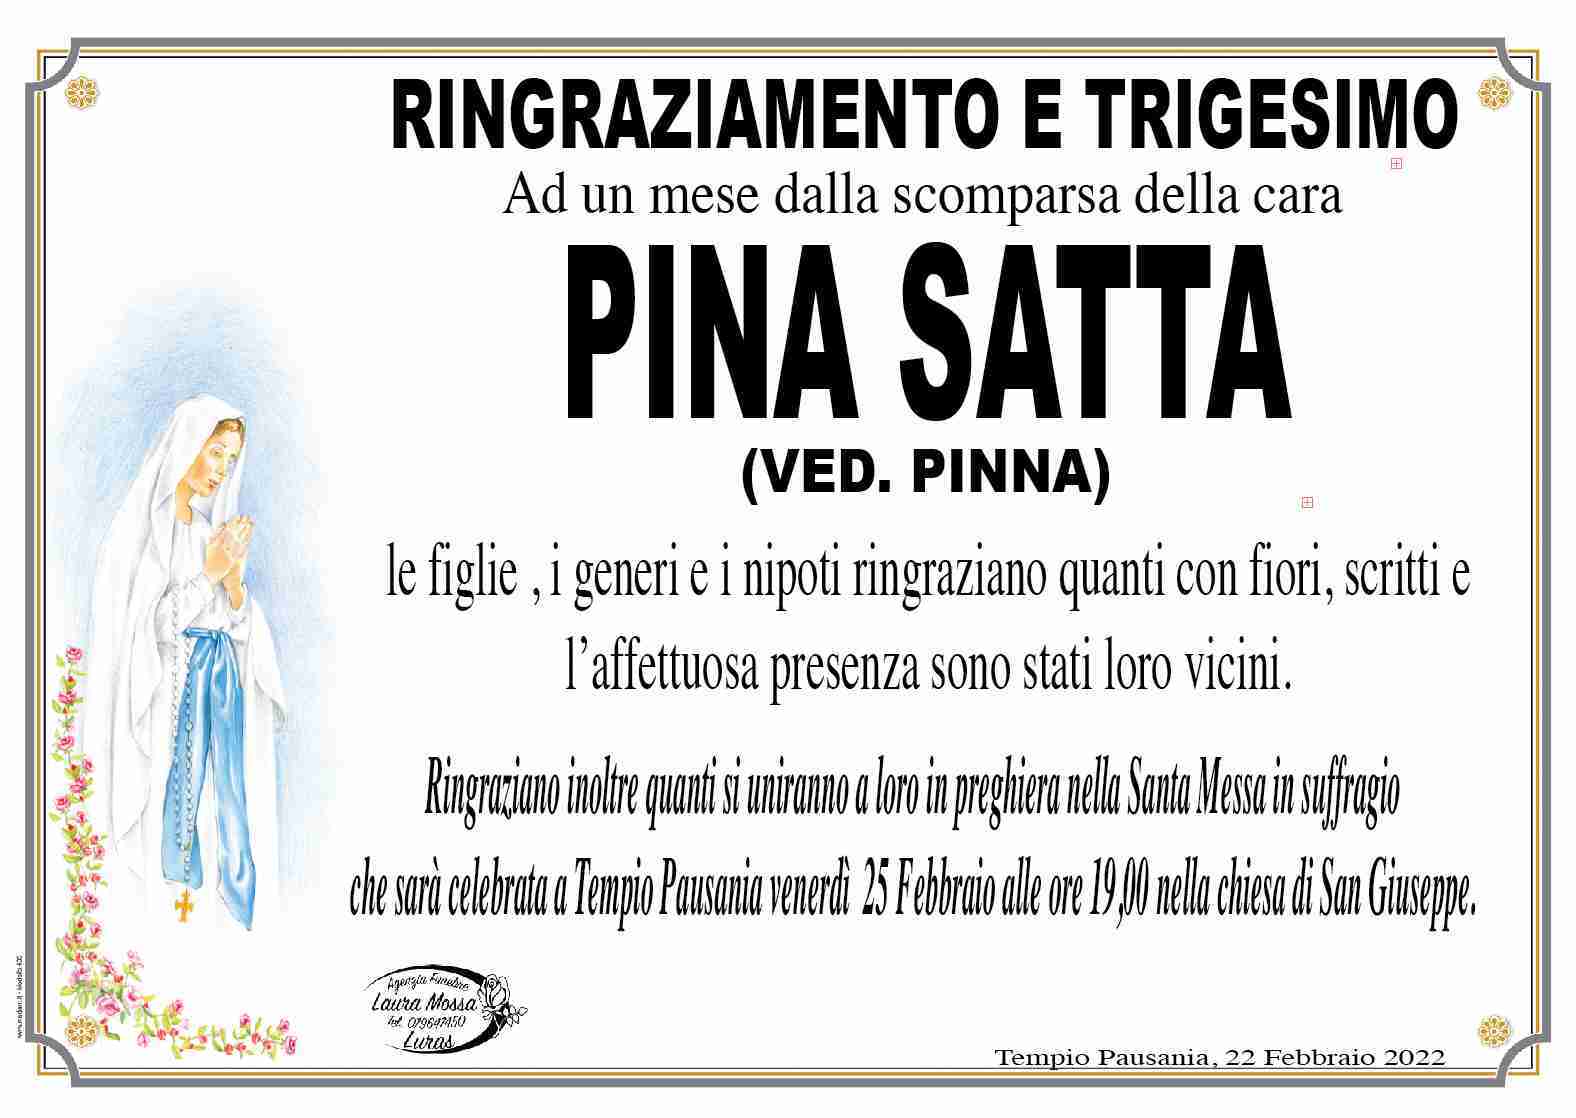 Giuseppina Pinna